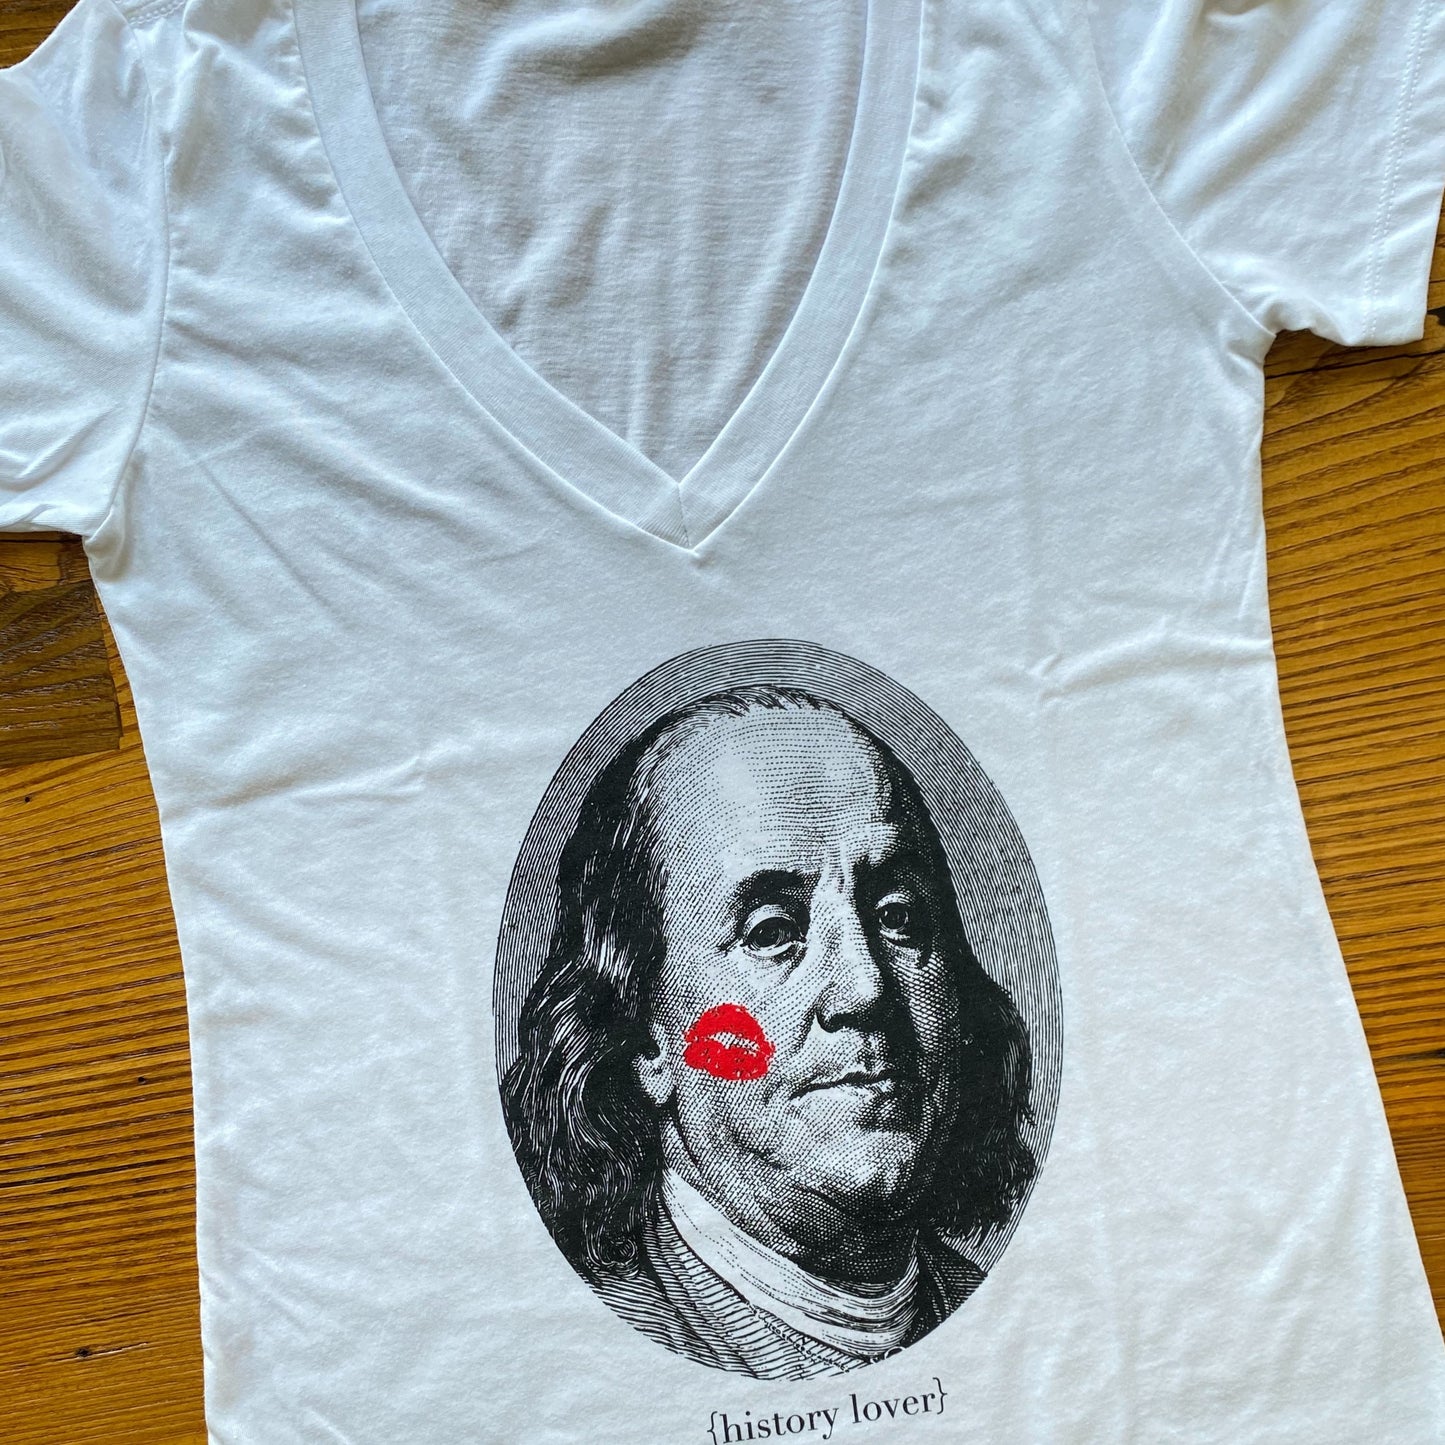 "History Lover" V-neck T-shirt with Ben Franklin